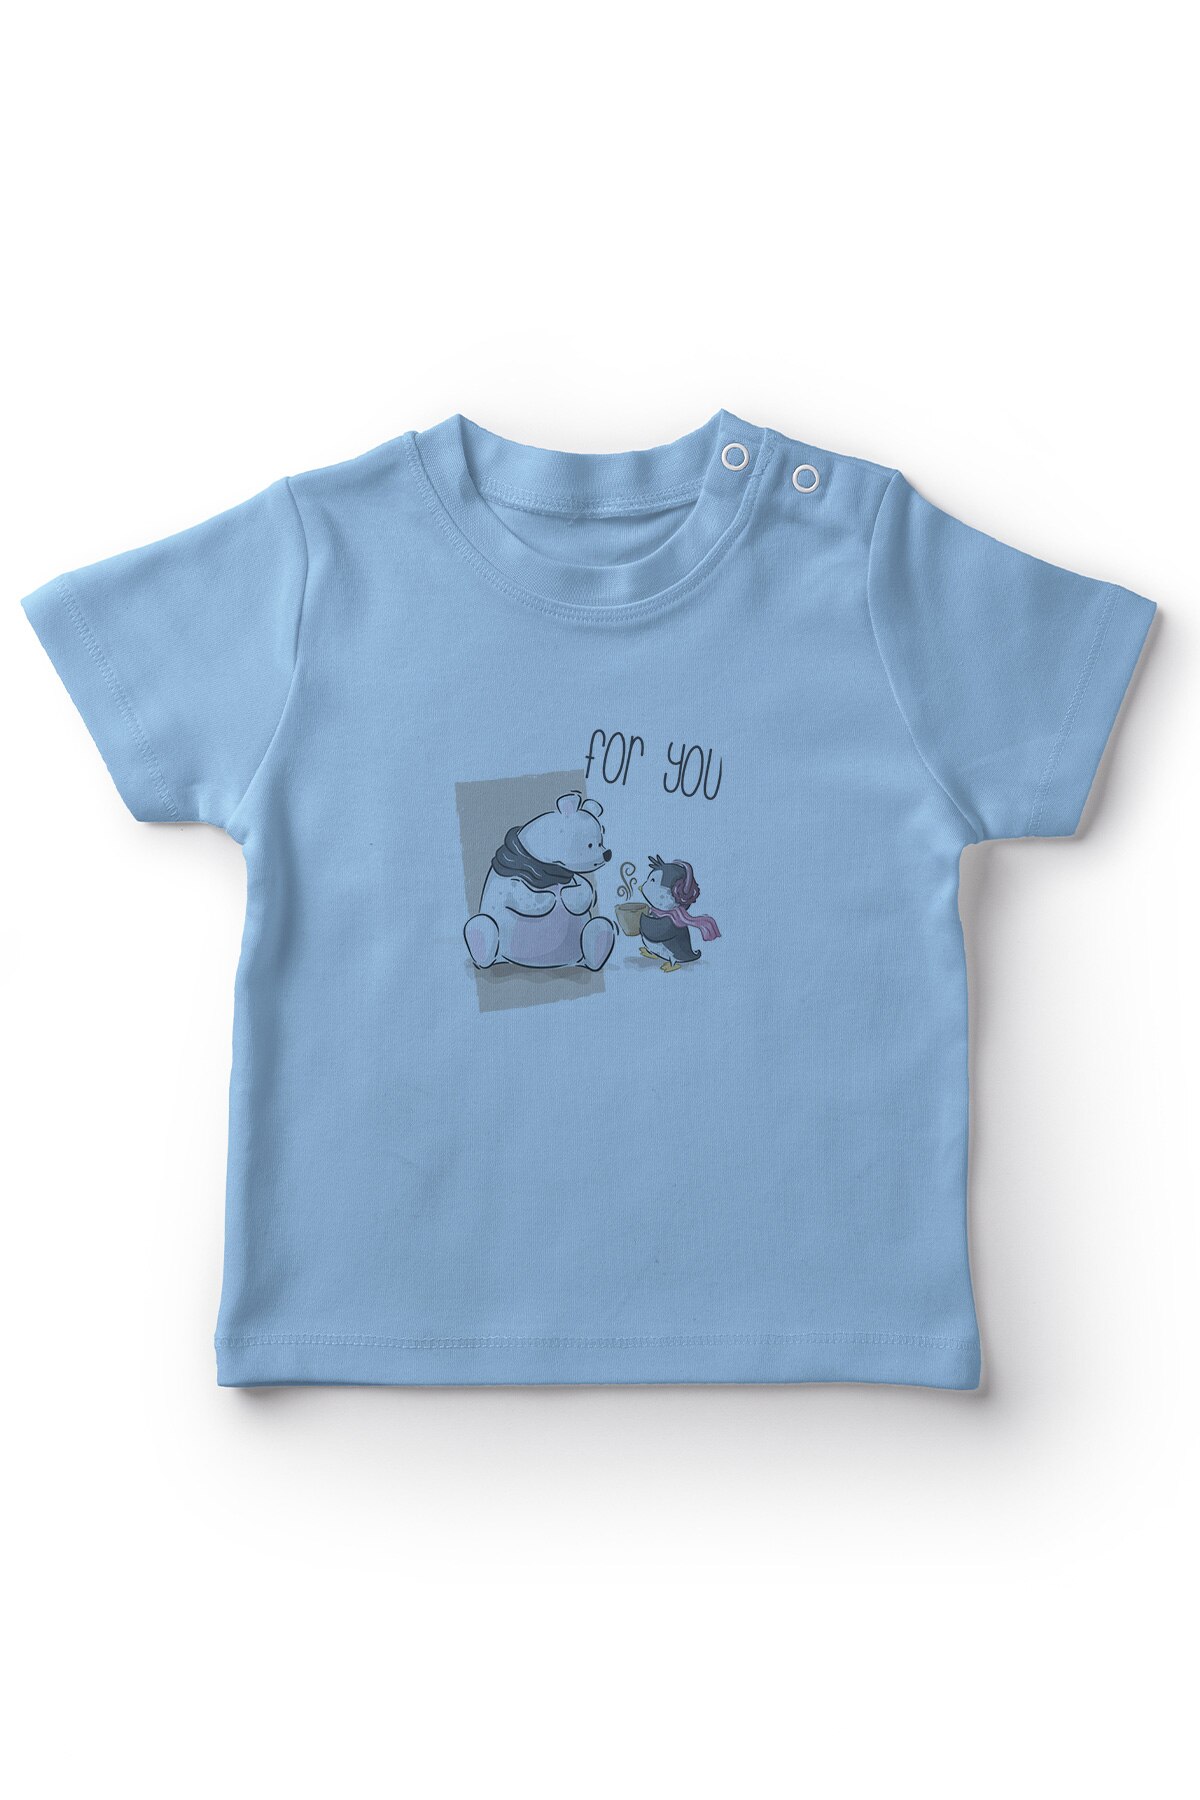 Angemiel baby søde pengeuen og bjørn baby dreng t-shirt blå